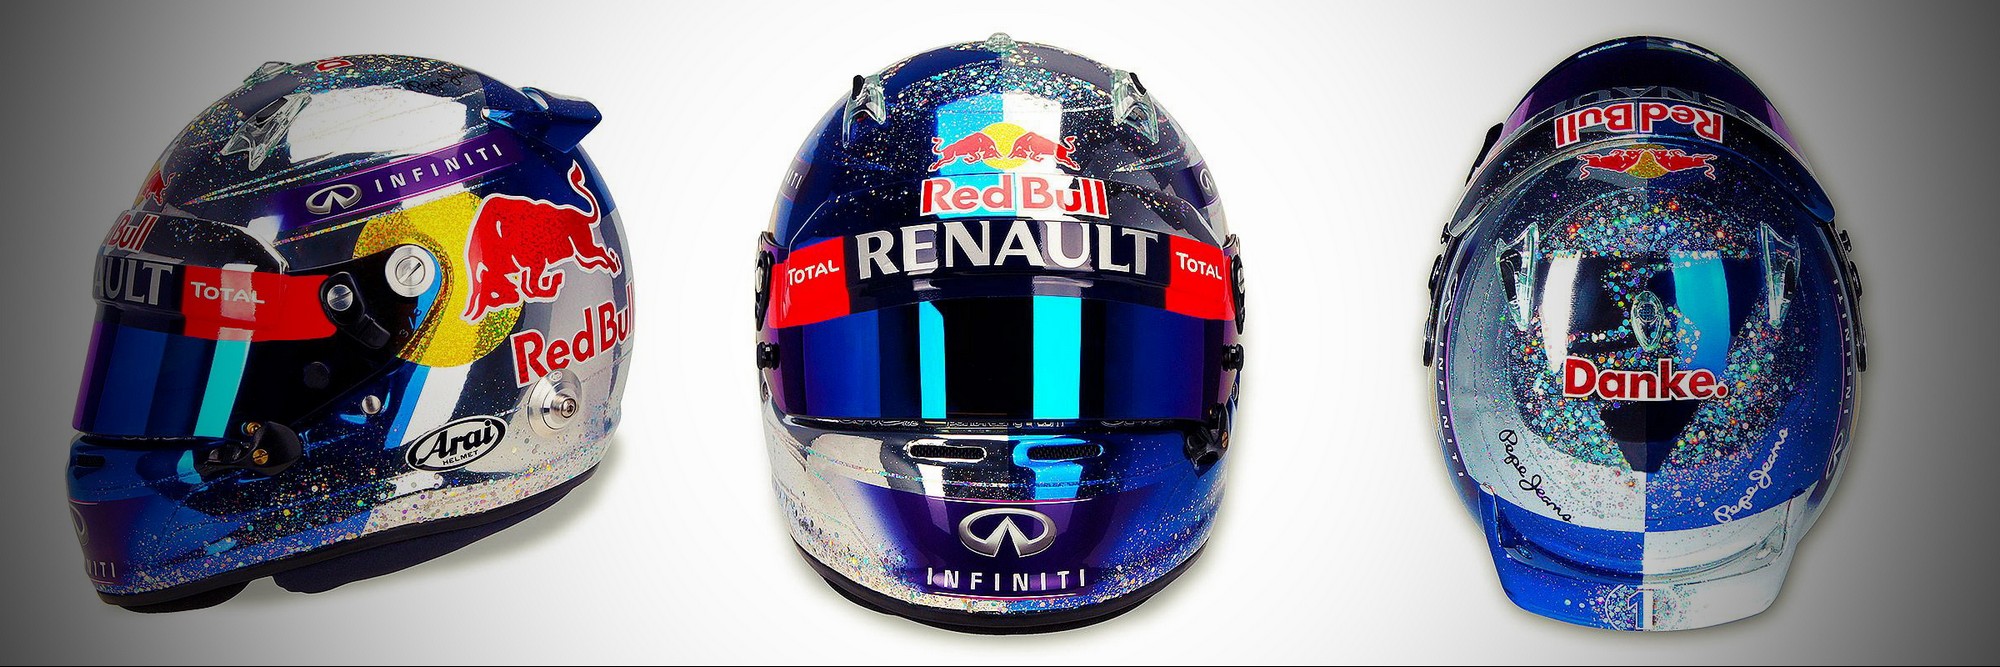 Шлем Себастьяна Феттеля на Гран-При Абу-Даби 2014 | 2014 Abu Dhabi Grand Prix helmet of Sebastian Vettel